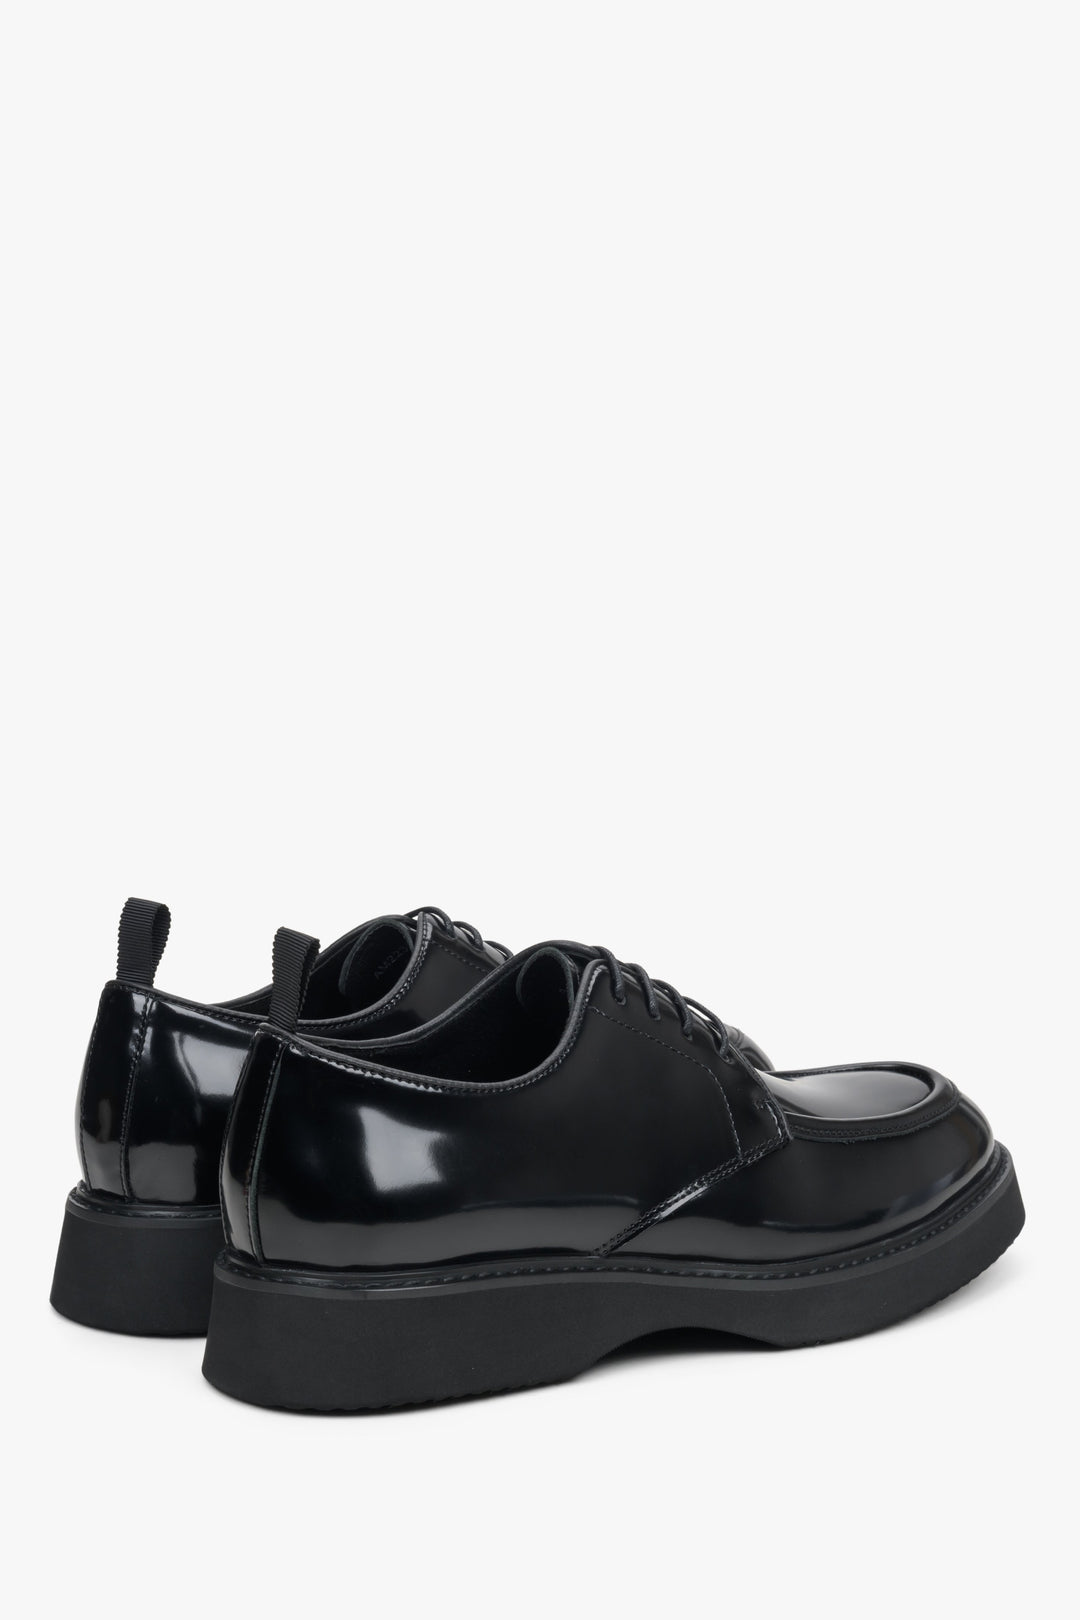 Men's black patent Estro brogues - close-up on the heel counter.